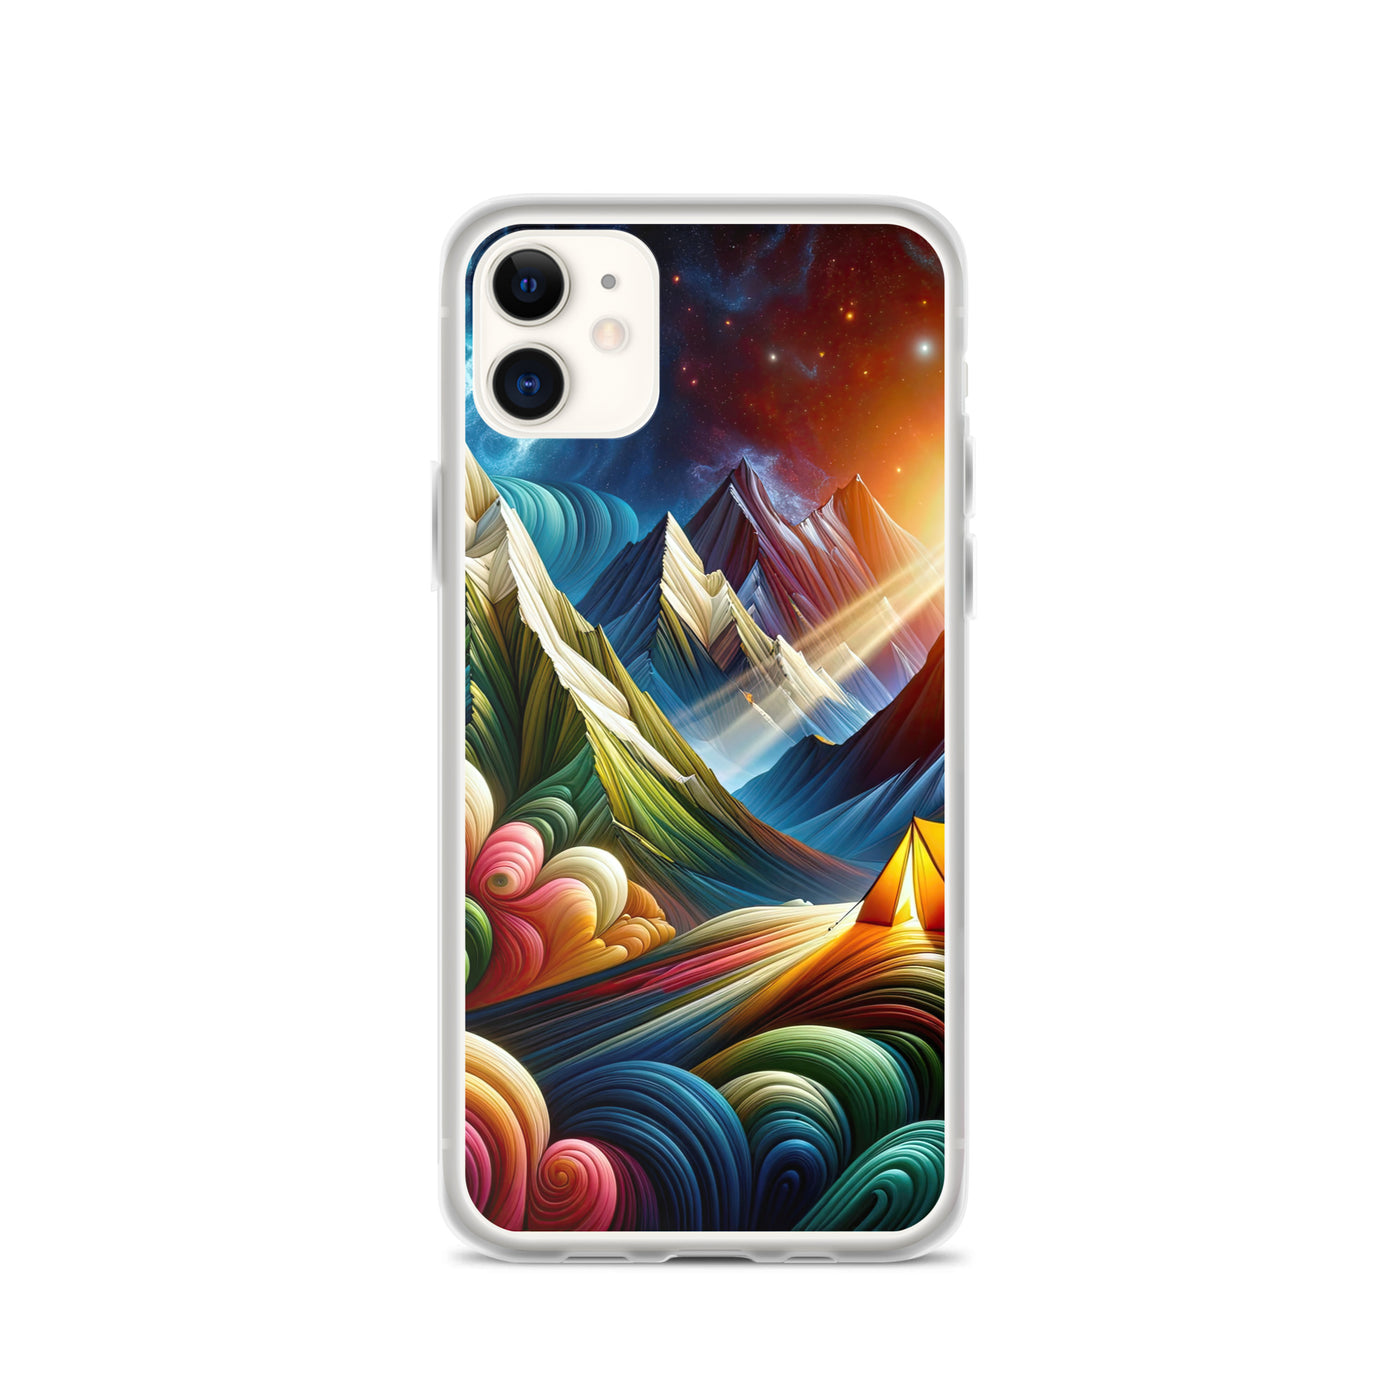 Abstrakte Bergwelt in lebendigen Farben mit Zelt - iPhone Schutzhülle (durchsichtig) camping xxx yyy zzz iPhone 11